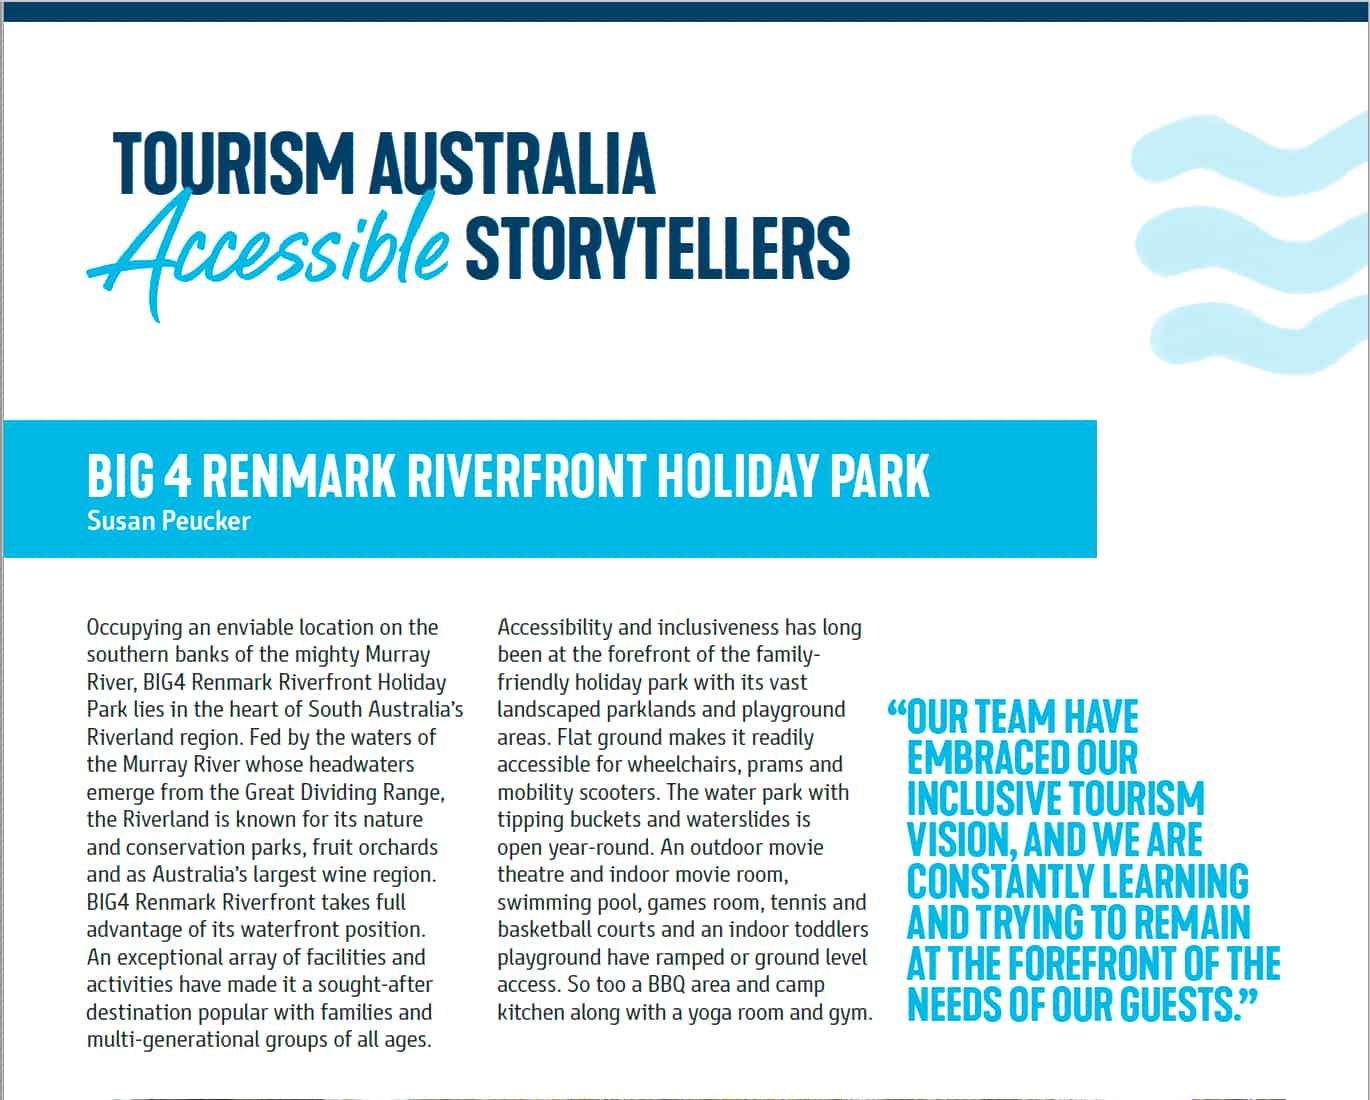 Tourism Australia content copywriter Fiona Harper